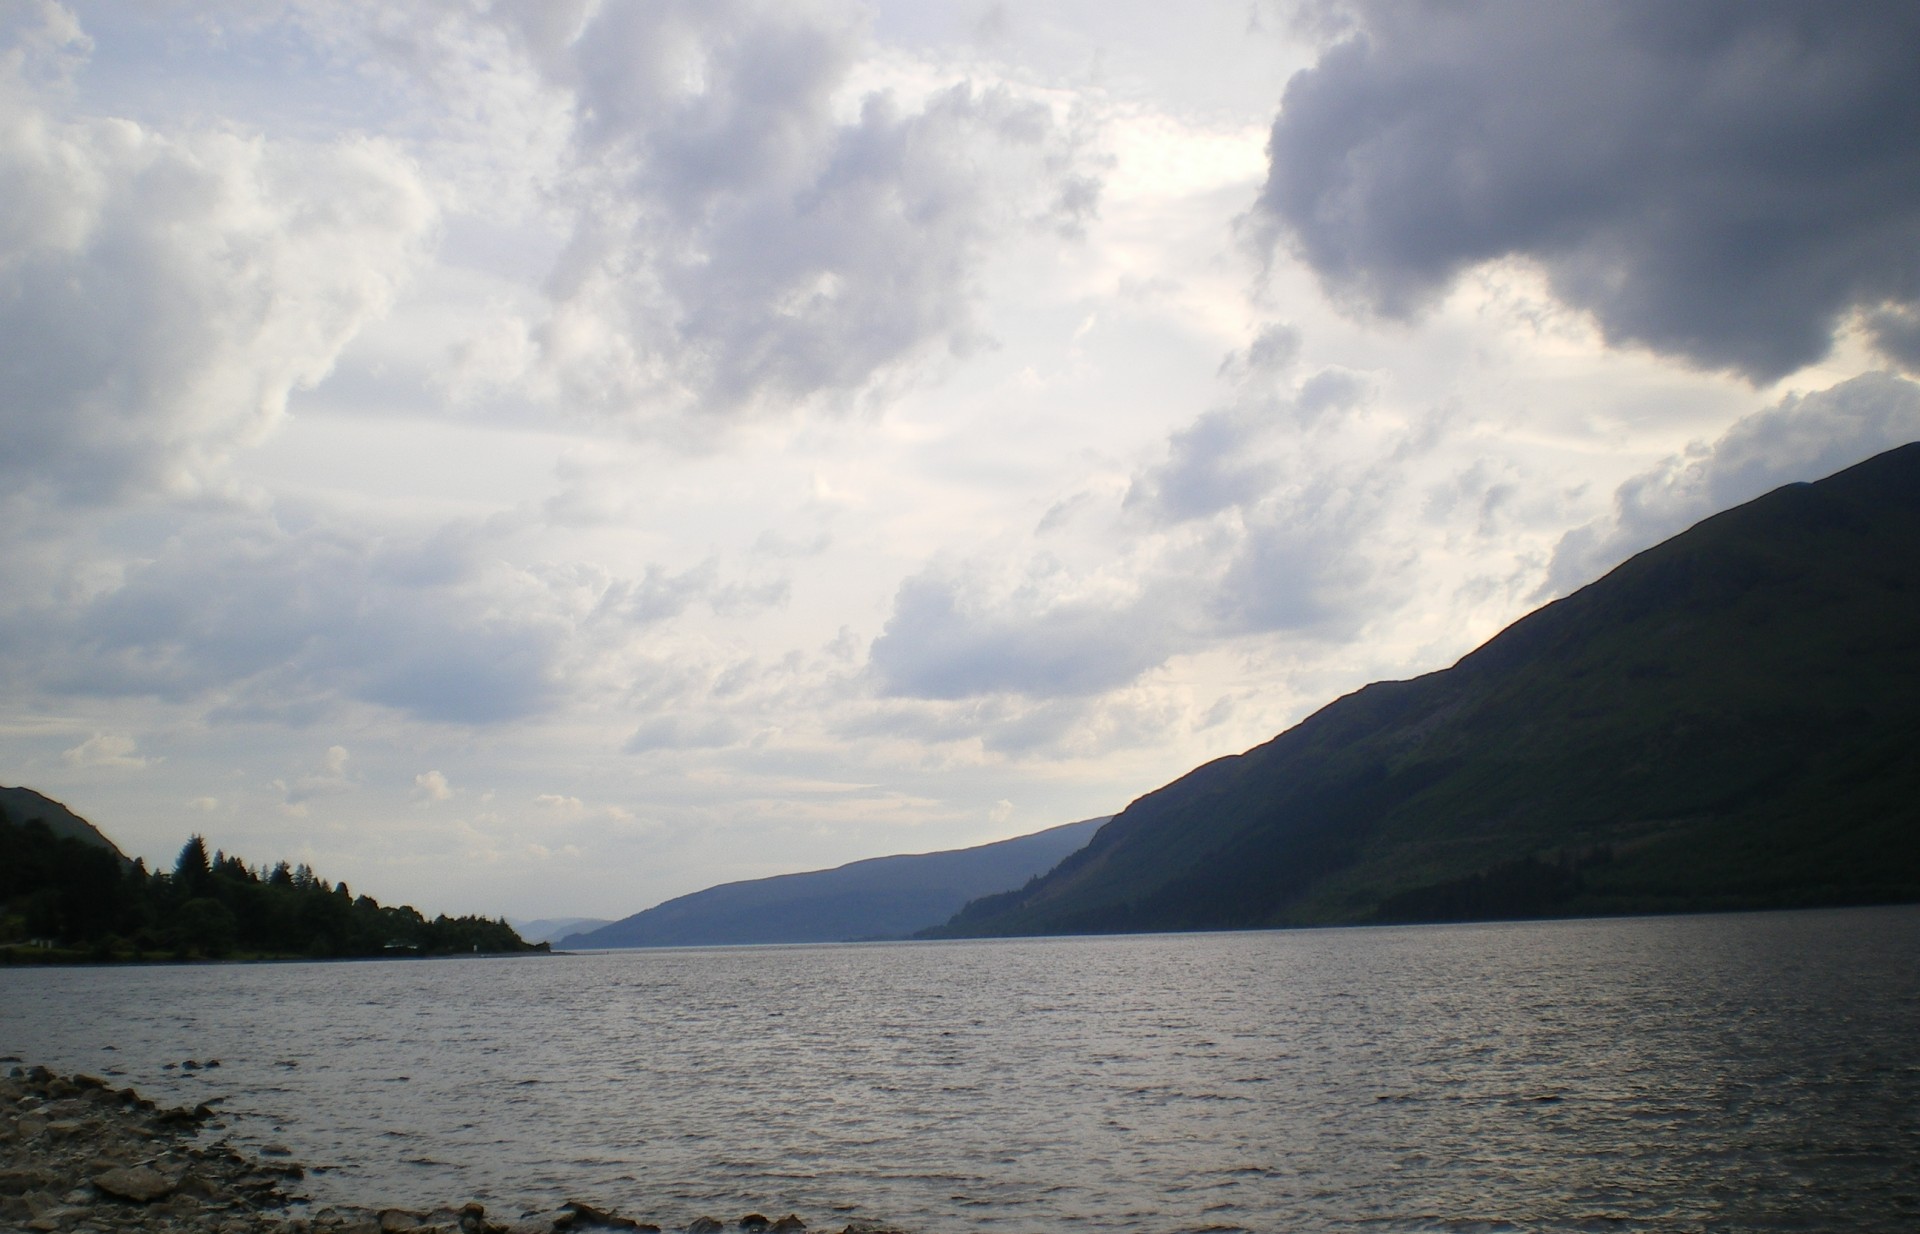 Loch Lochy (Scottish Gaelic, Loch Lochaidh) is a large freshwater loch in Lochaber, Highland, Scotland.